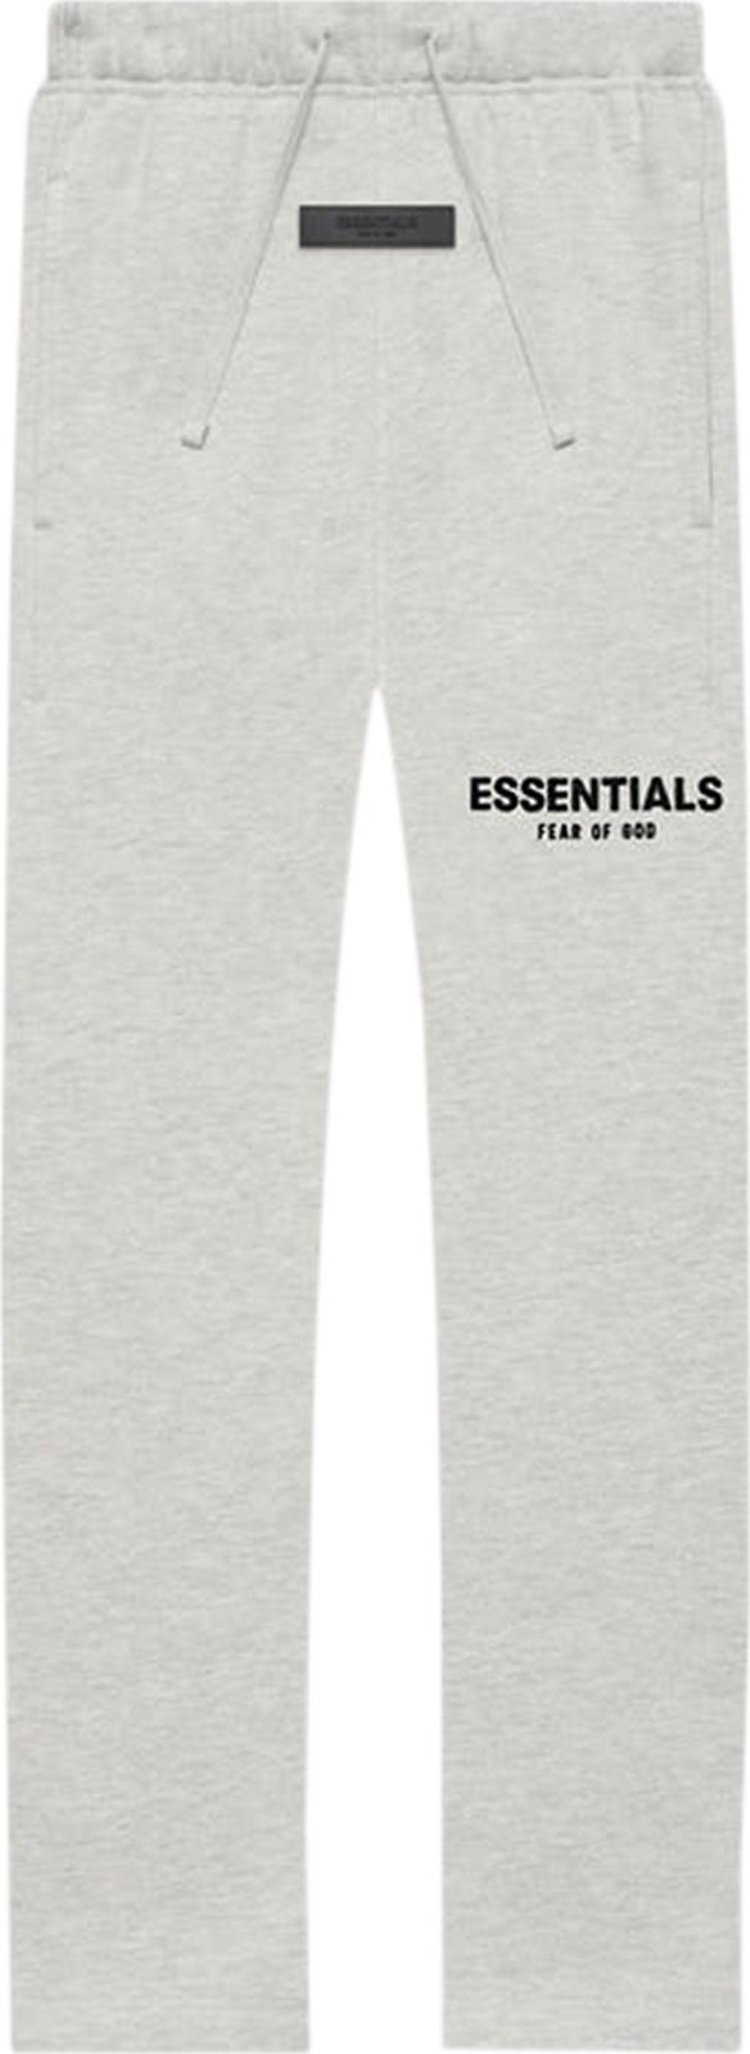 ESSENTIALS Essentials Sweatpants in Light Heather Grey